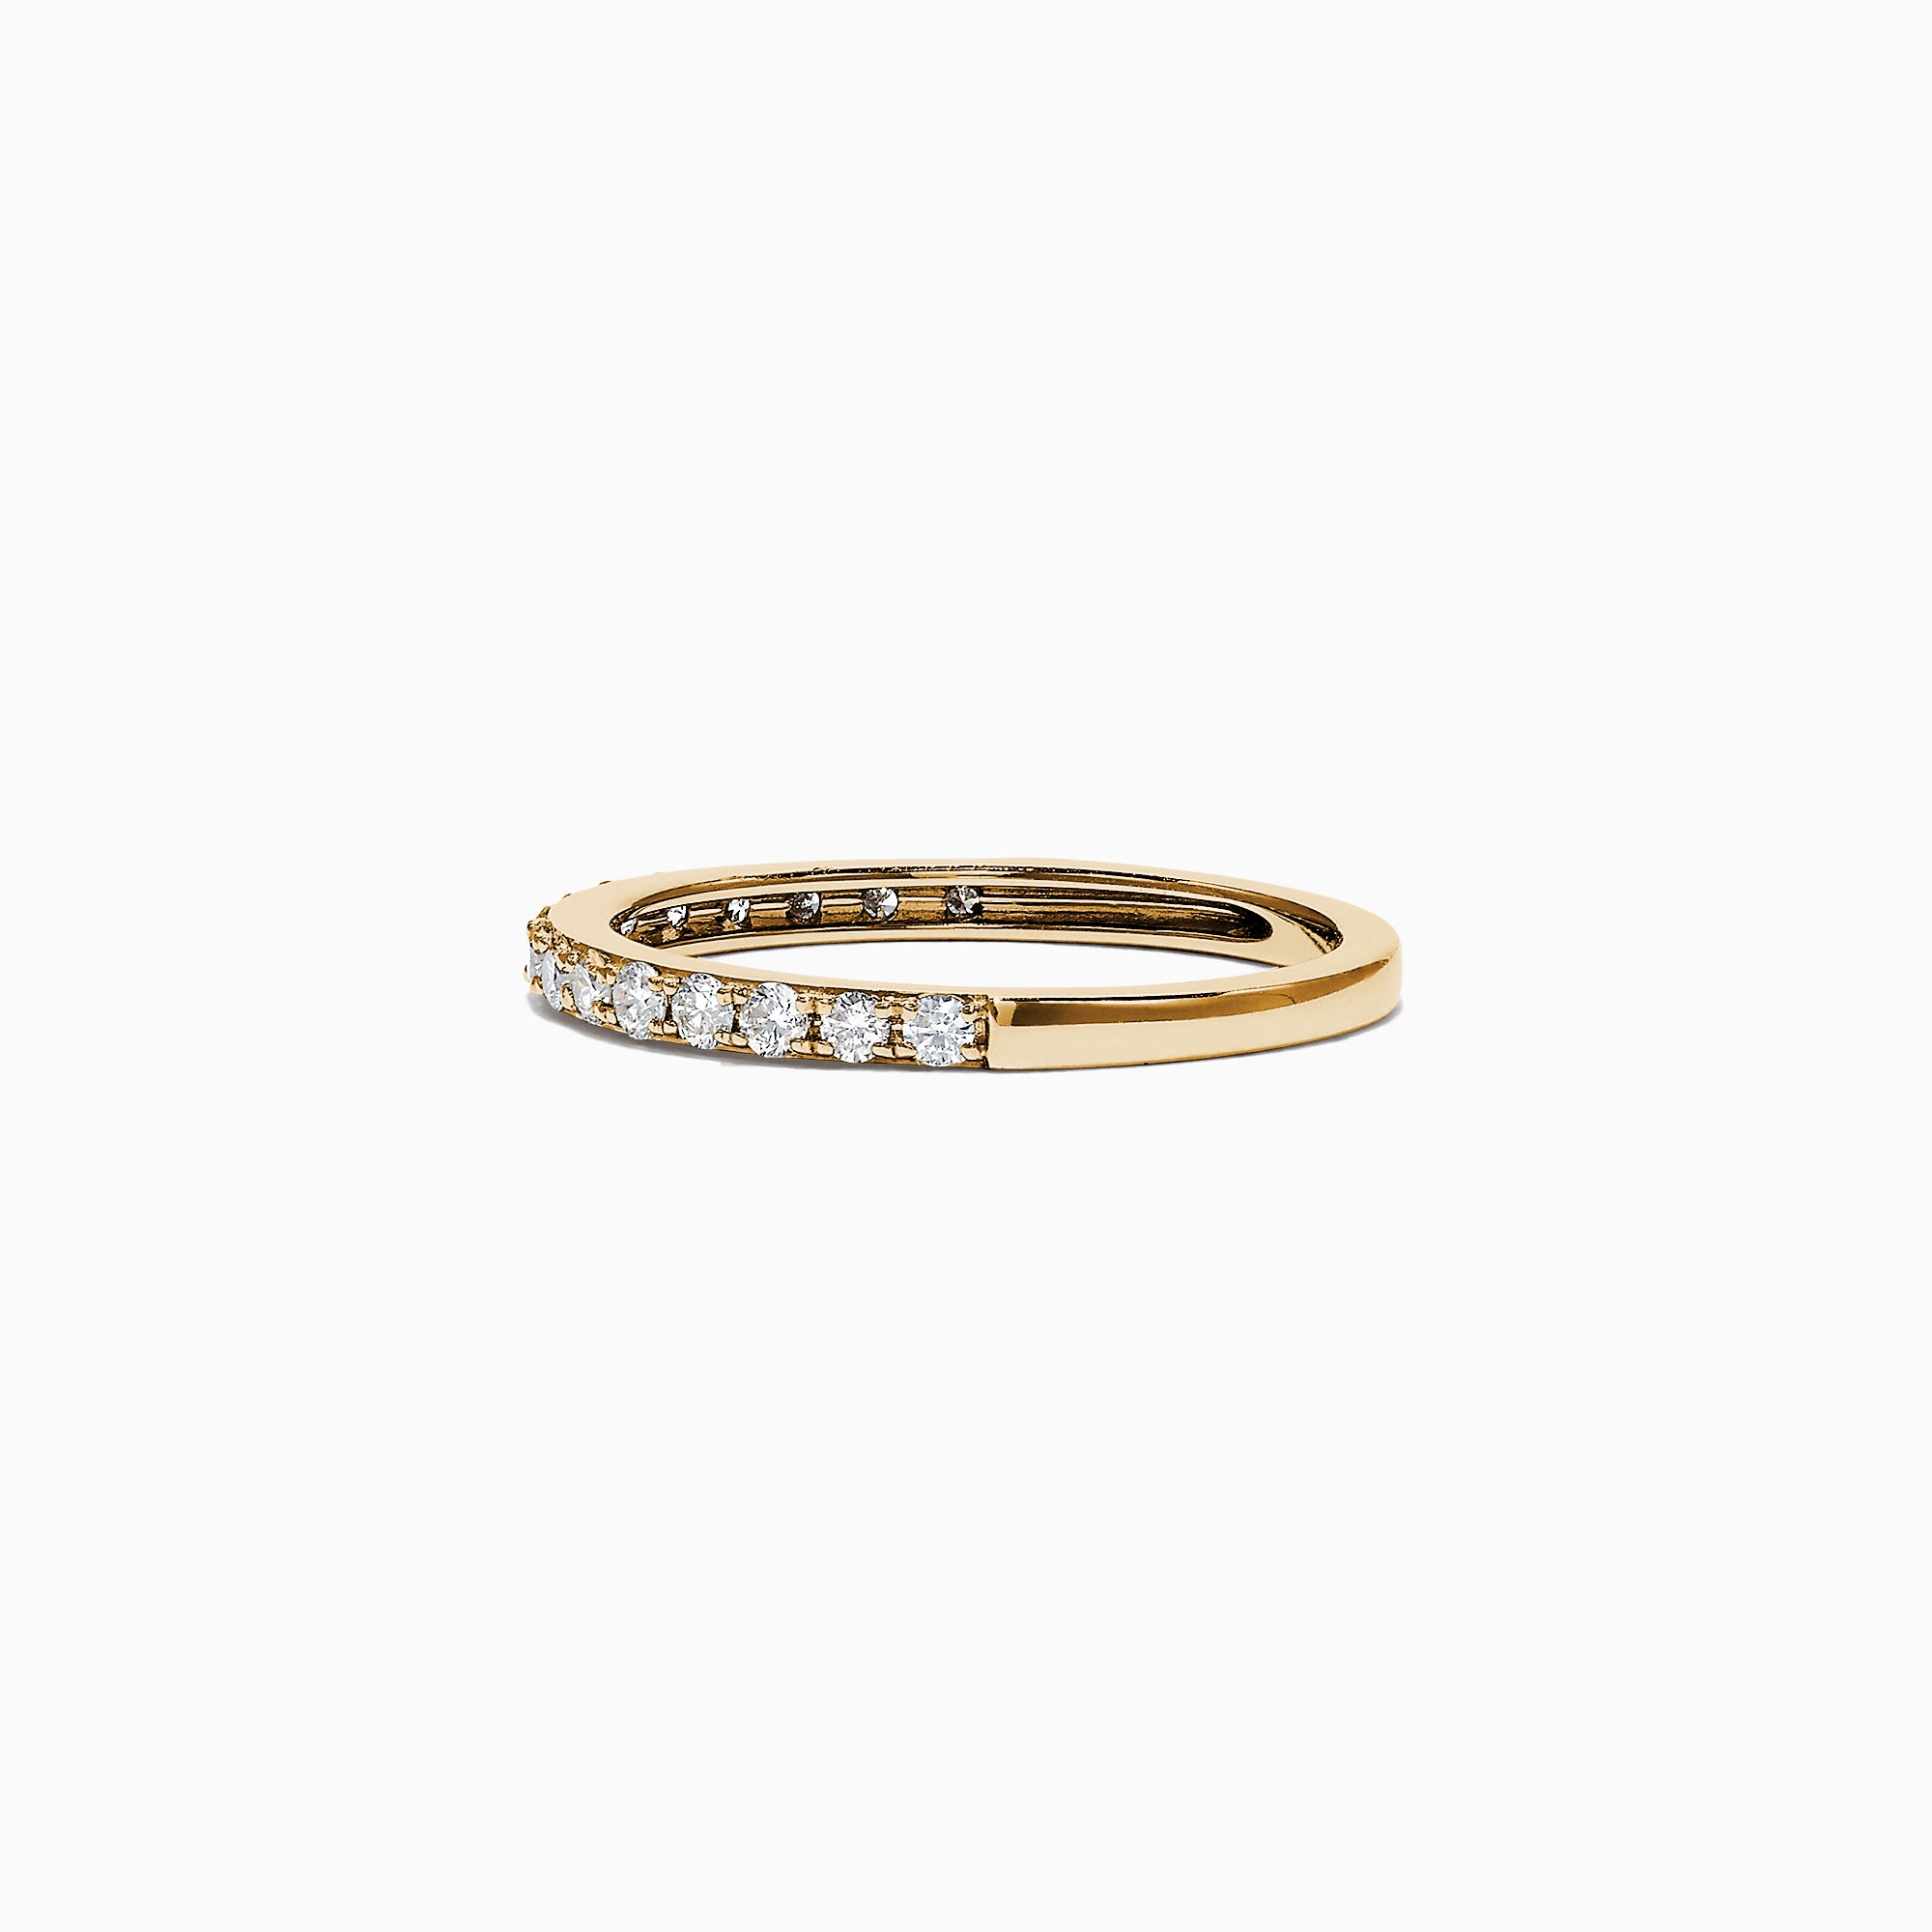 Effy D'Oro 14K Yellow Gold Diamond Band Ring, 0.34 TCW